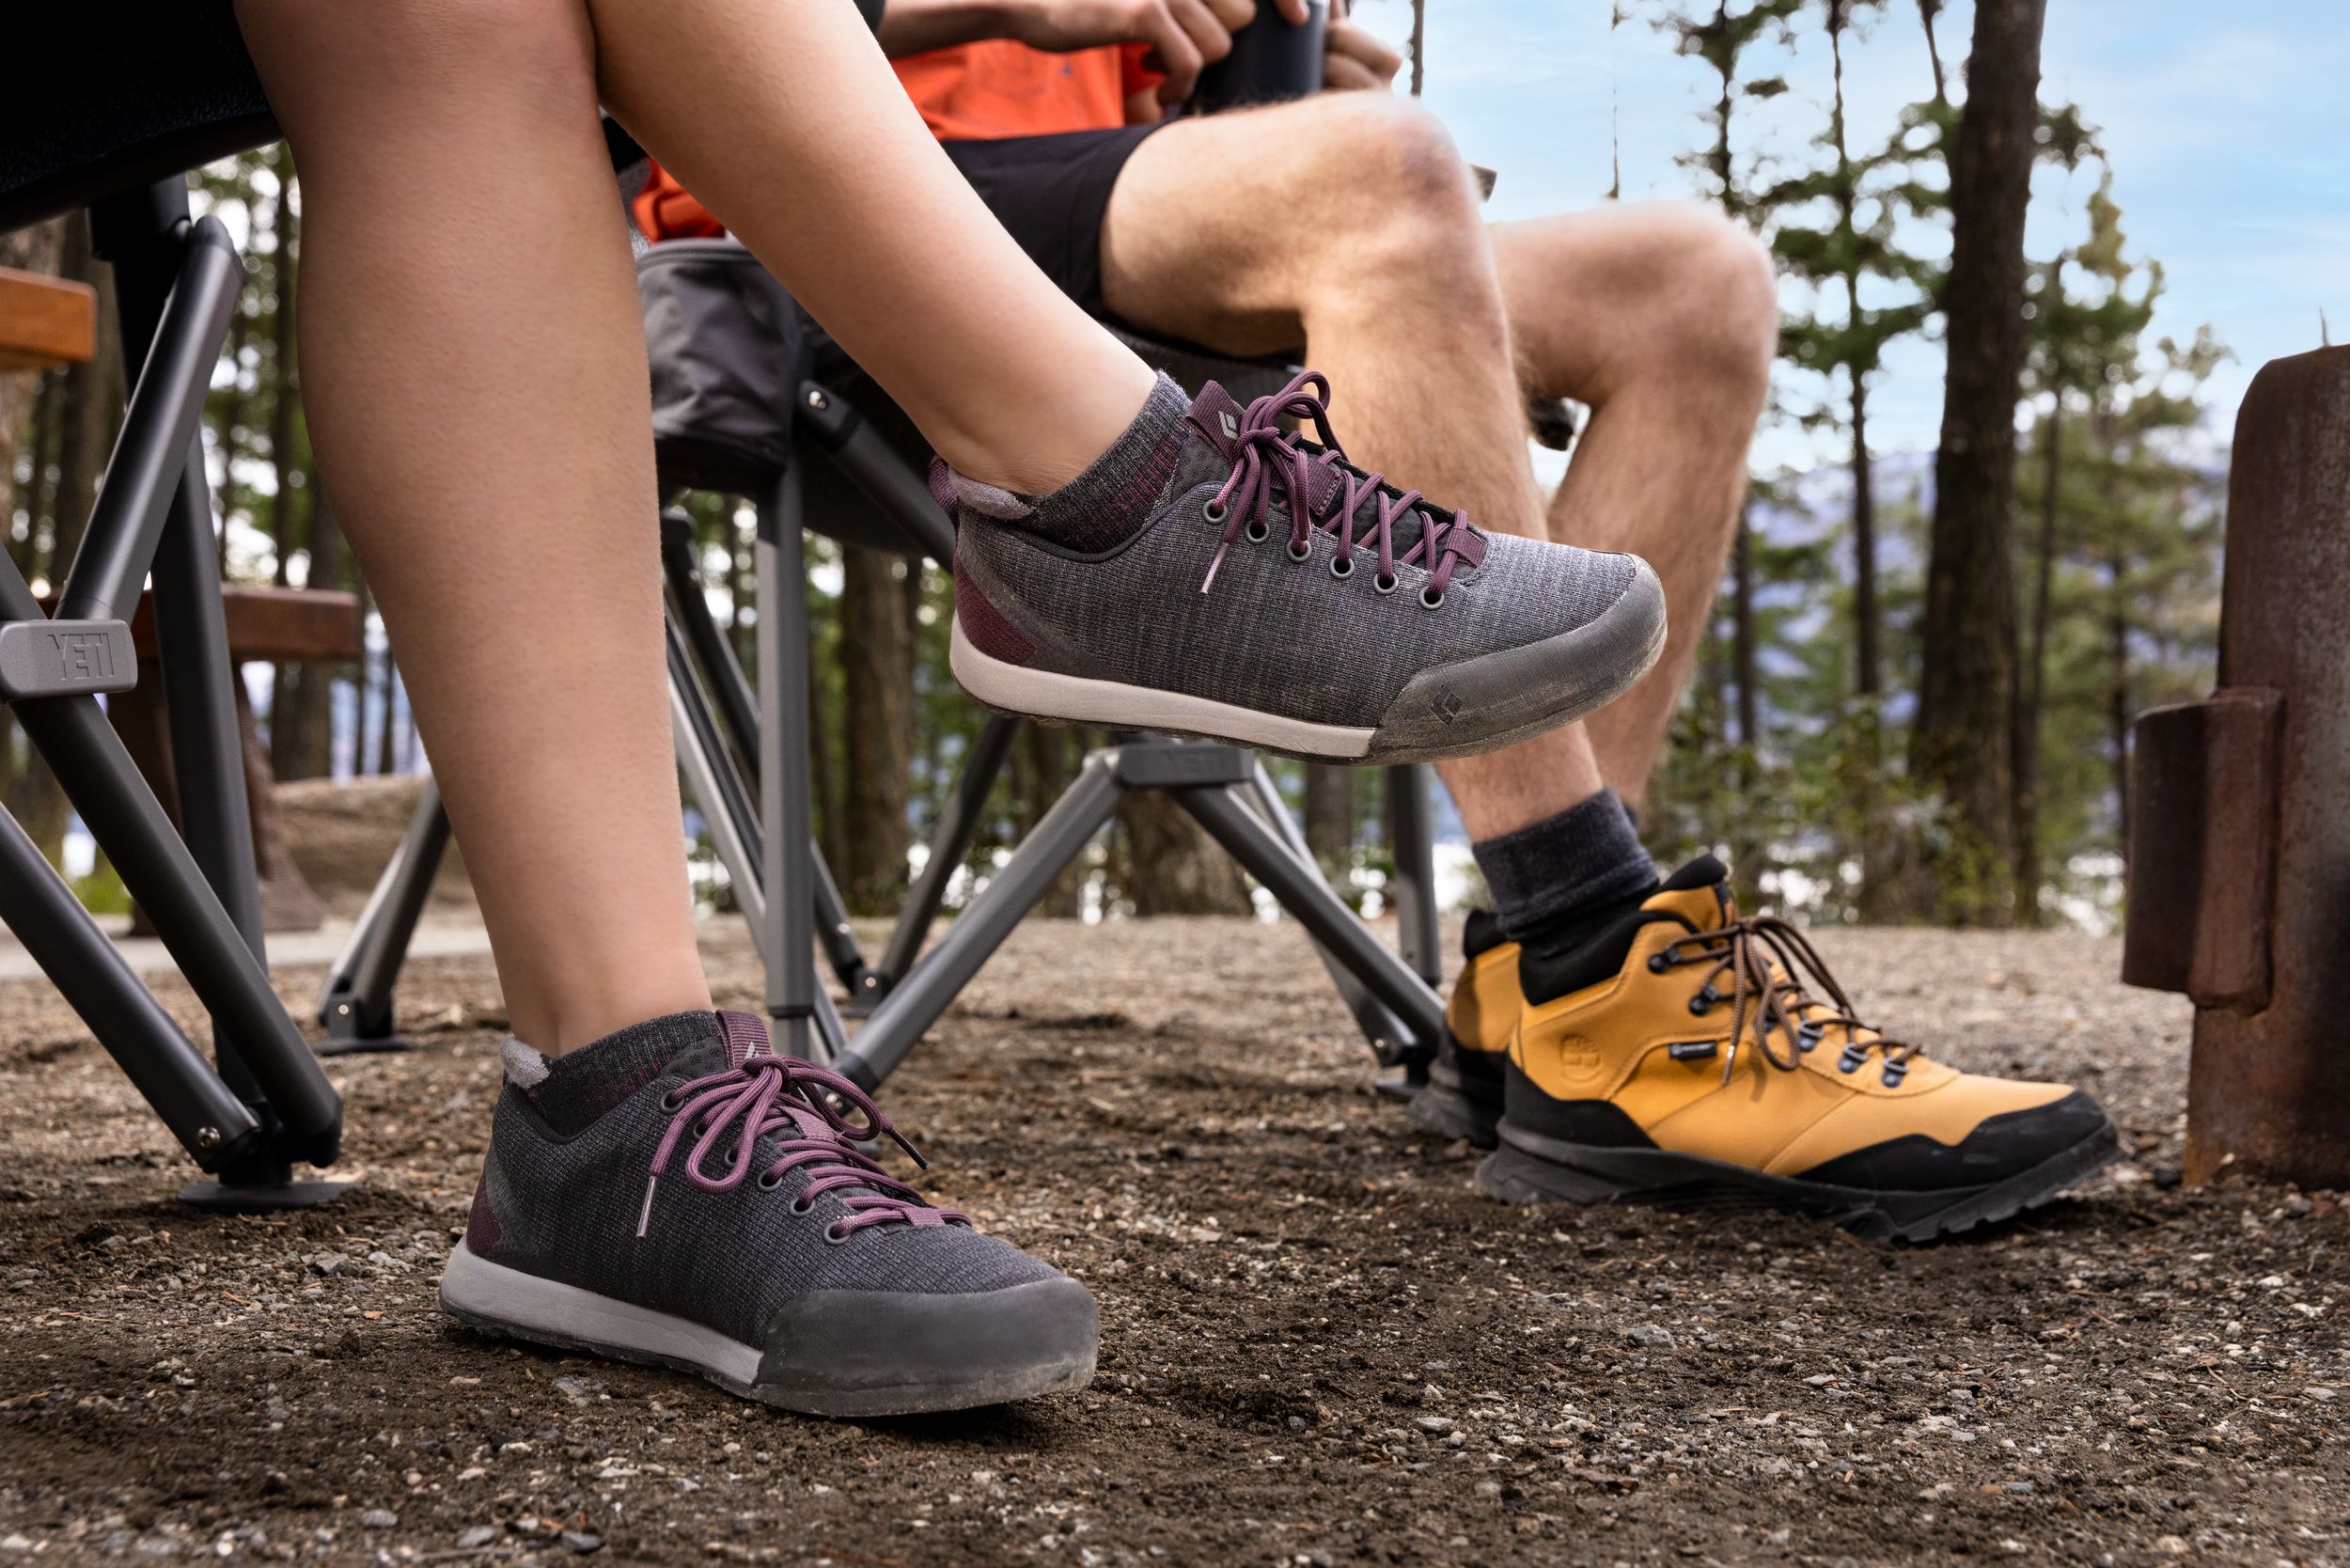 Timberland Men's Lincoln Peak Hiking Boots, Mid Top, Waterproof